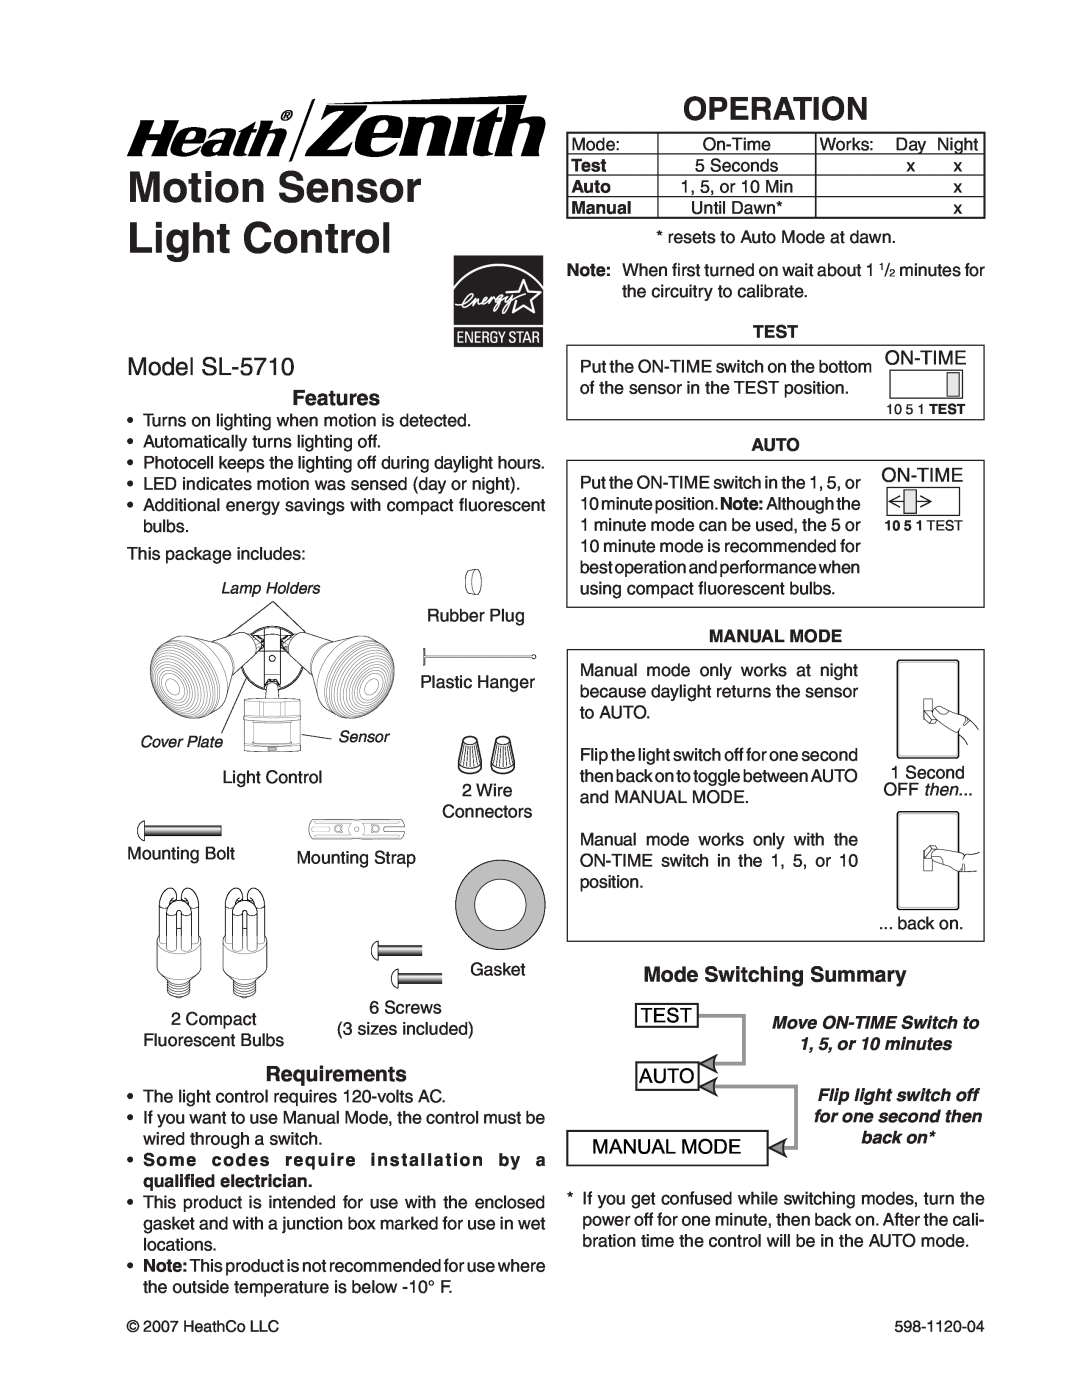 Heath Zenith manual Operation, Model SL-5710, Motion Sensor Light Control, On-Time, Test, Auto, Manual Mode, back on 